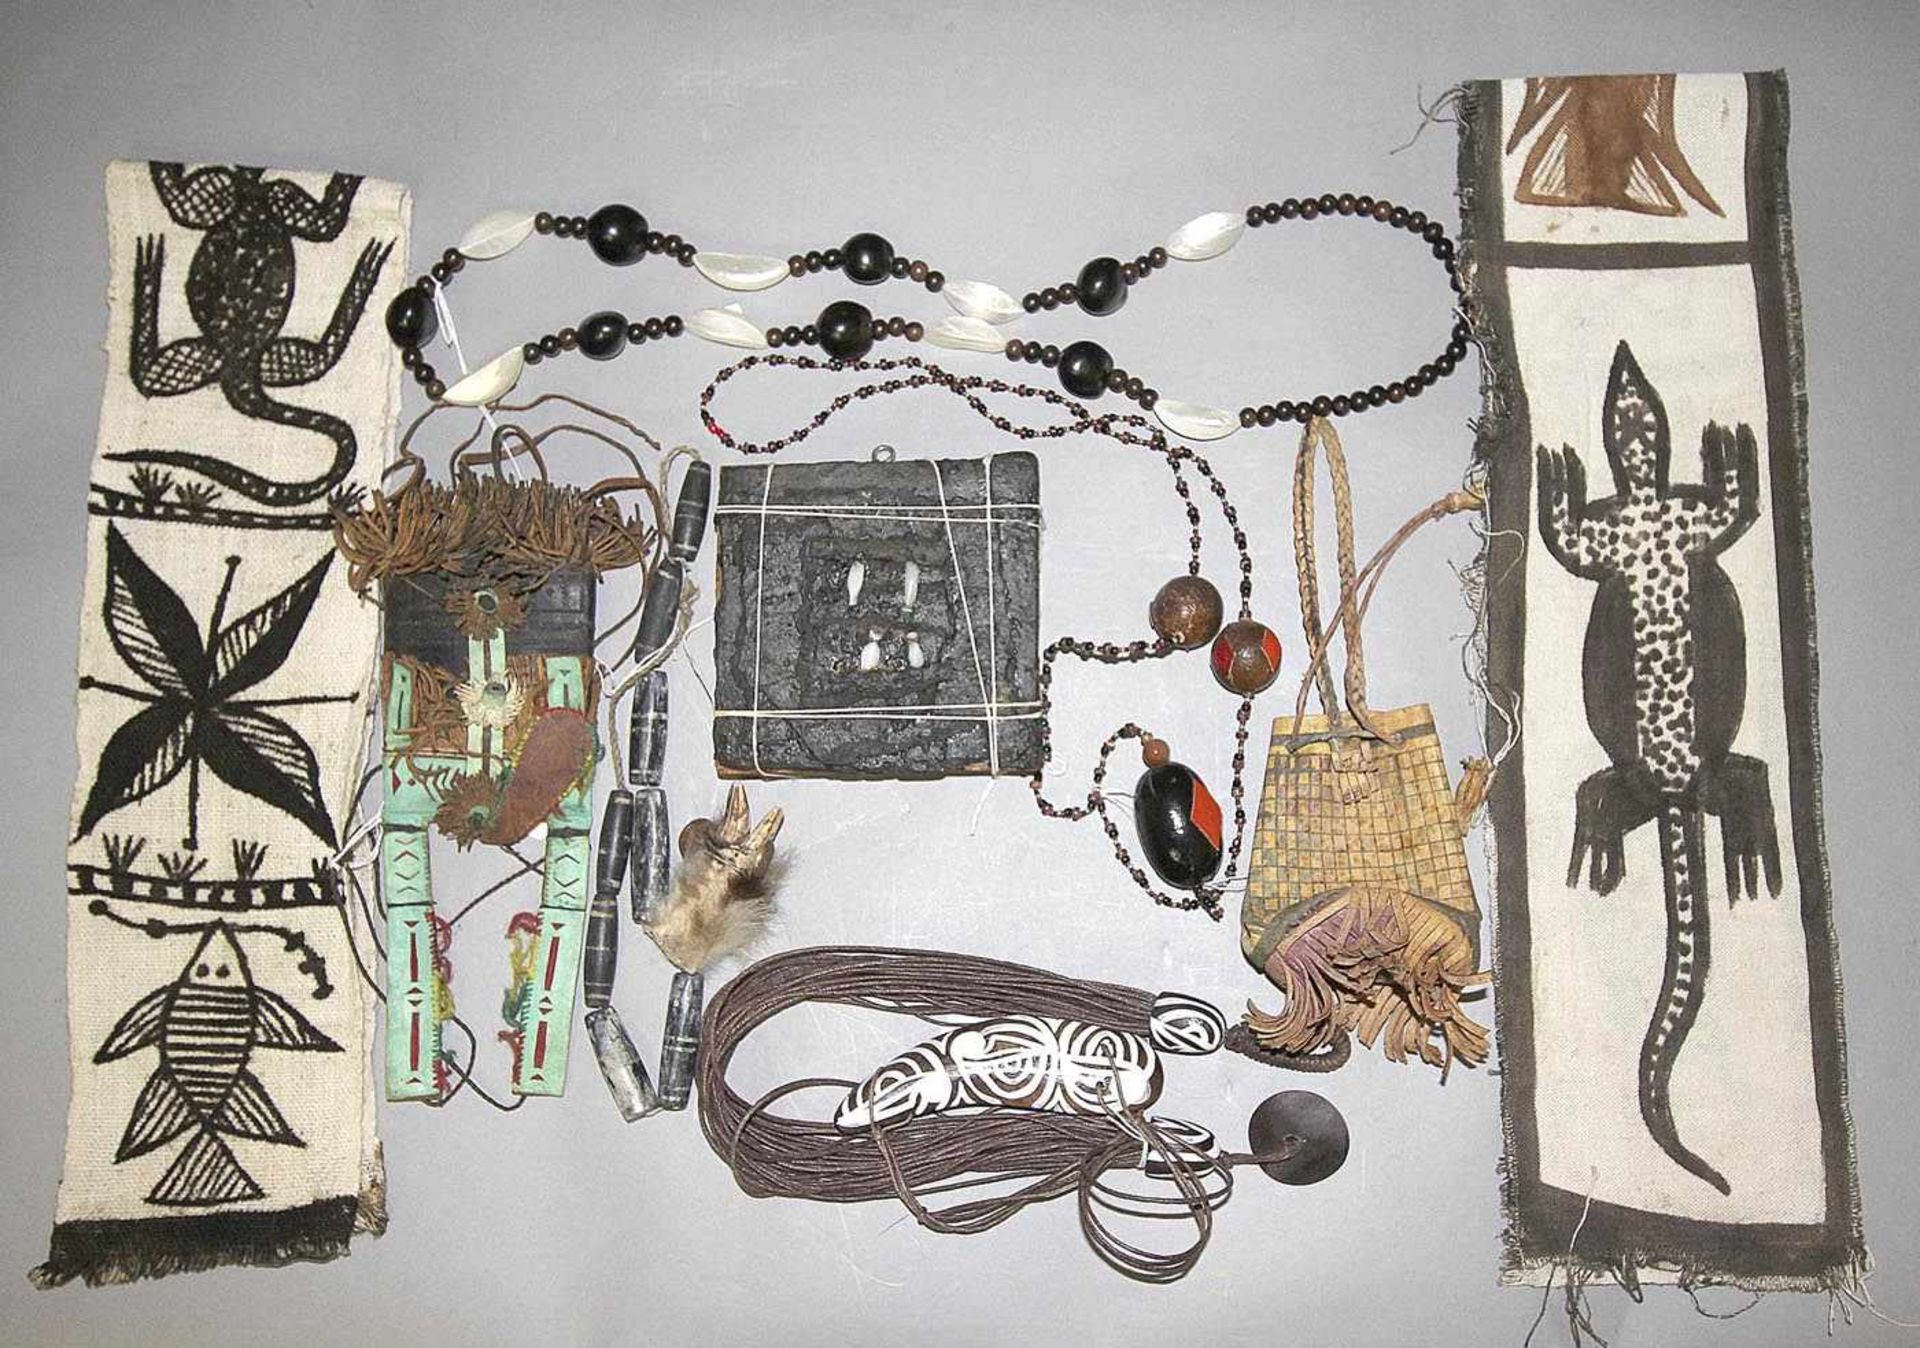 Konvolut Afrika, 8 Teile4 Halsketten, 2 Lederbeutel, 2 bedruckte Tuchstreifen, 1 rituelles